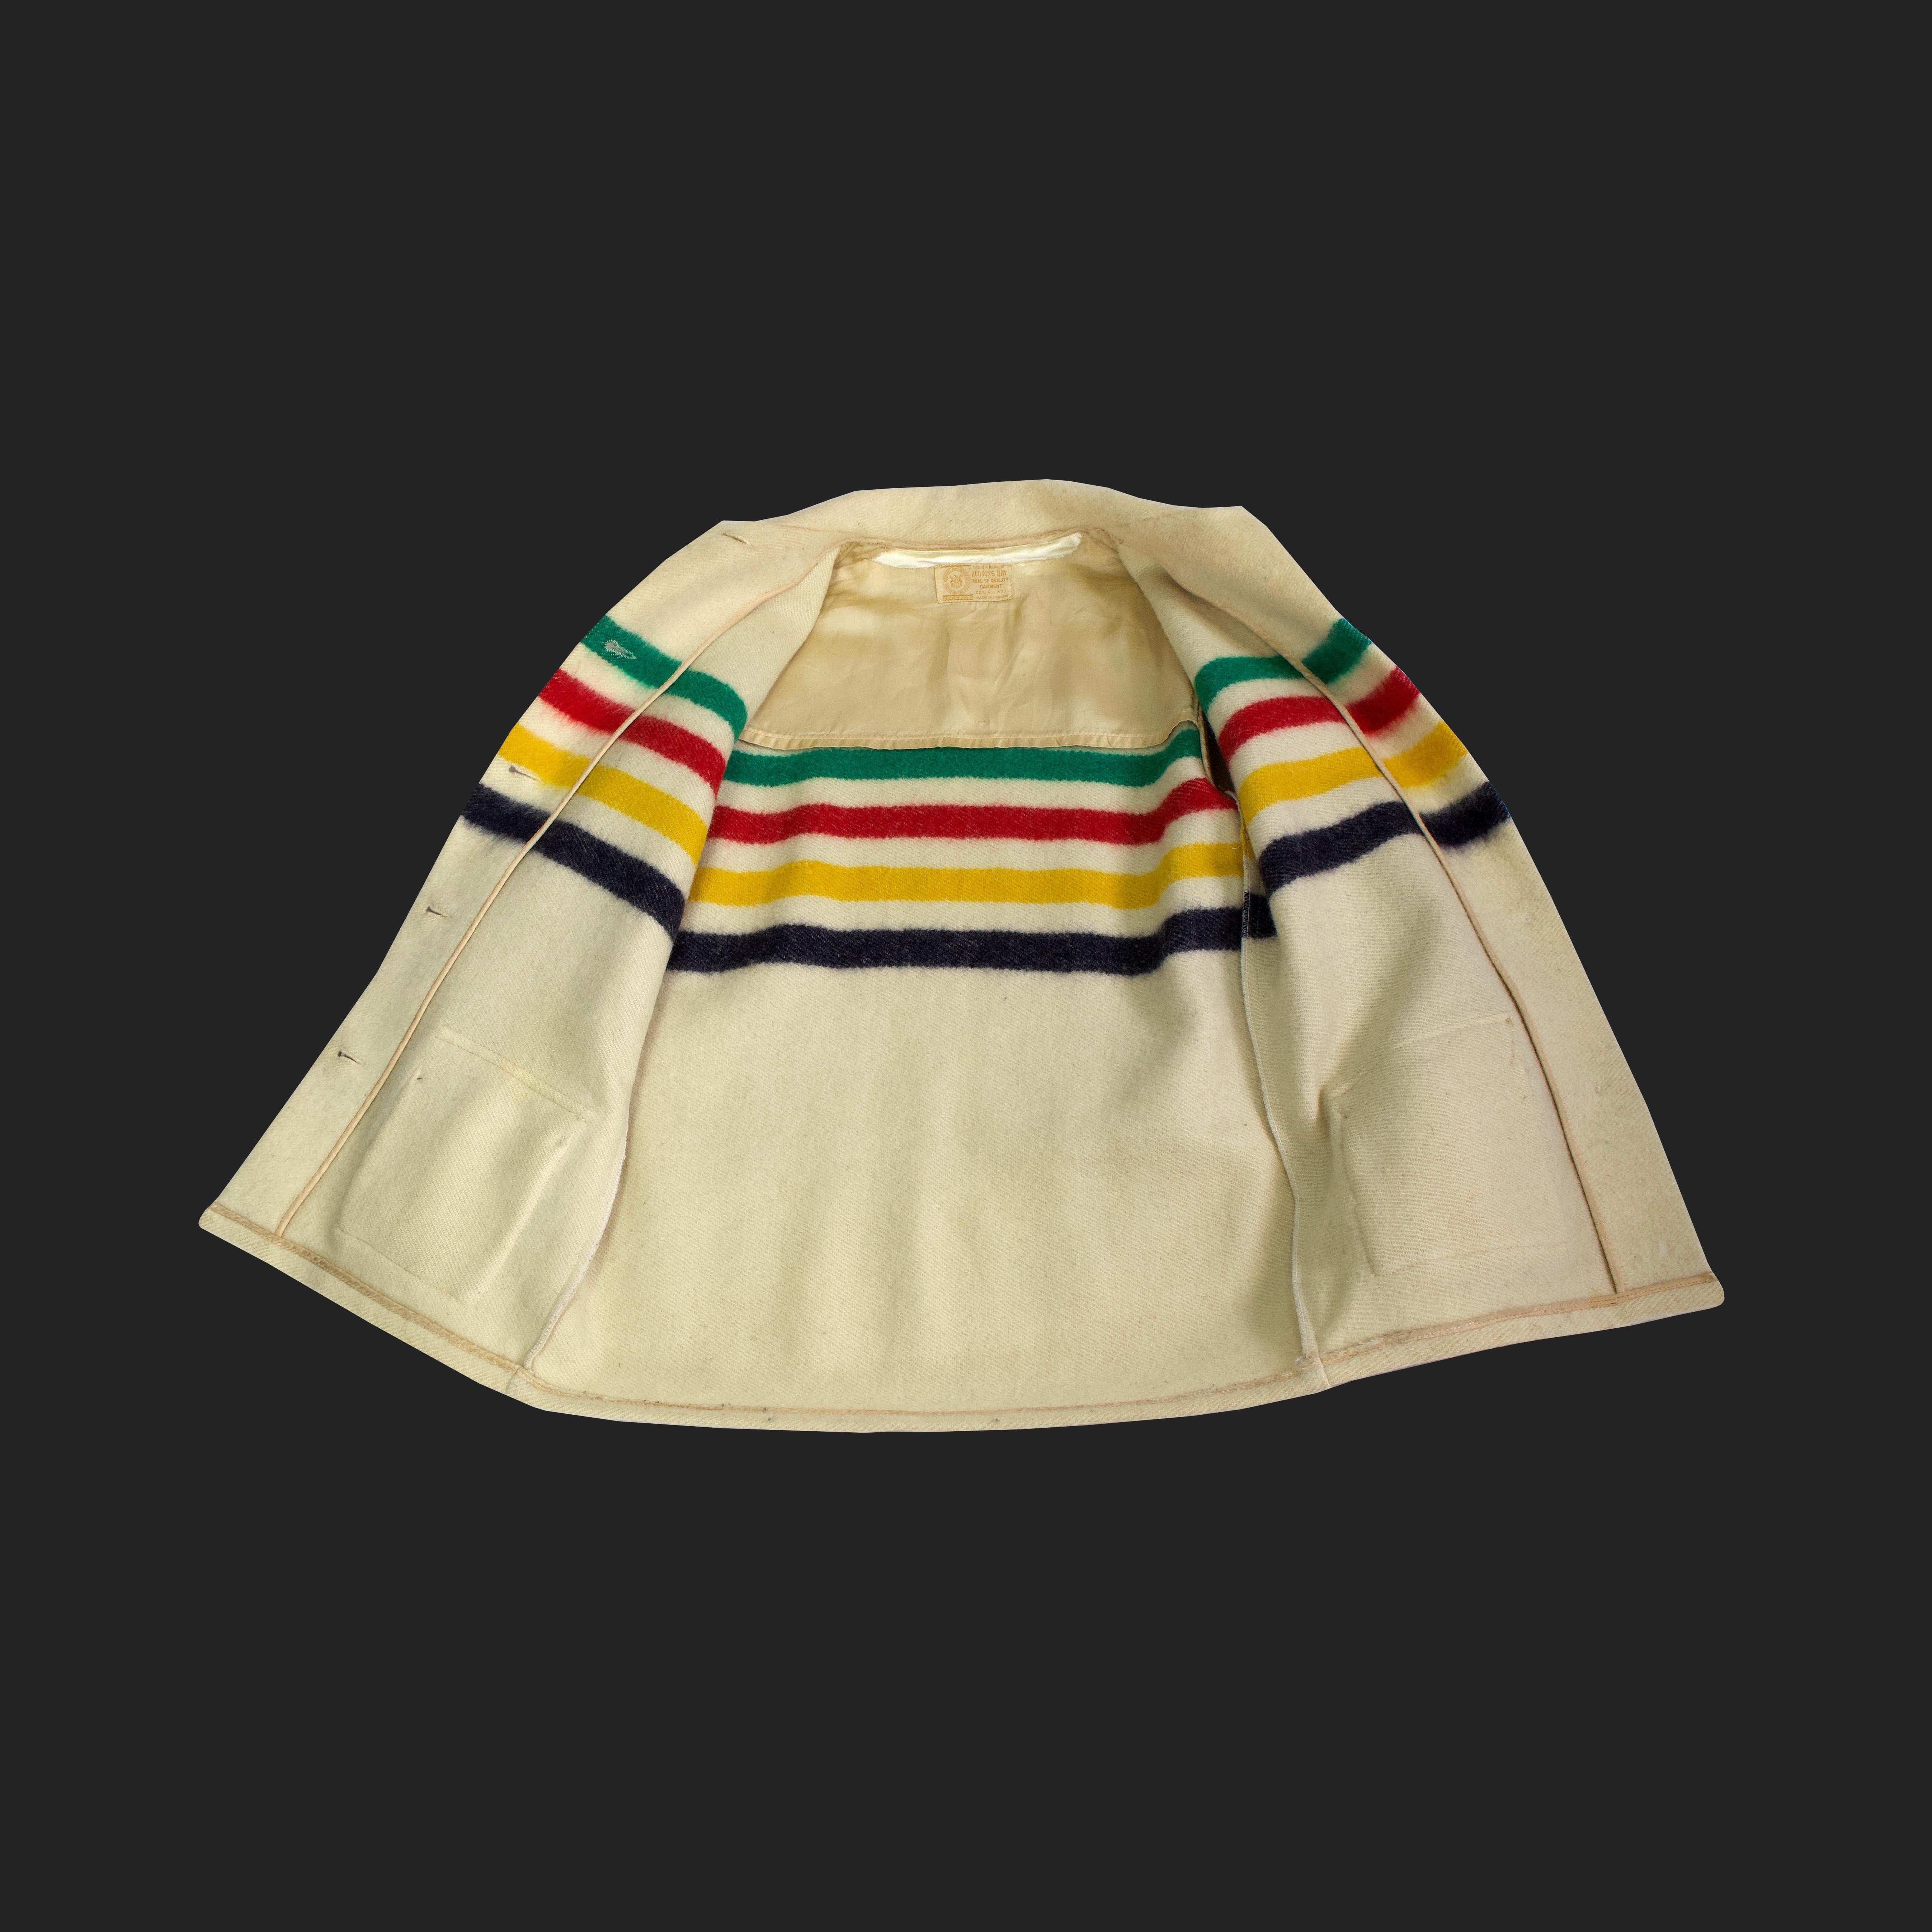 Beige Hudson’s Bay Jacket - 1960s Vintage - 100% Wool - Made in Canada 